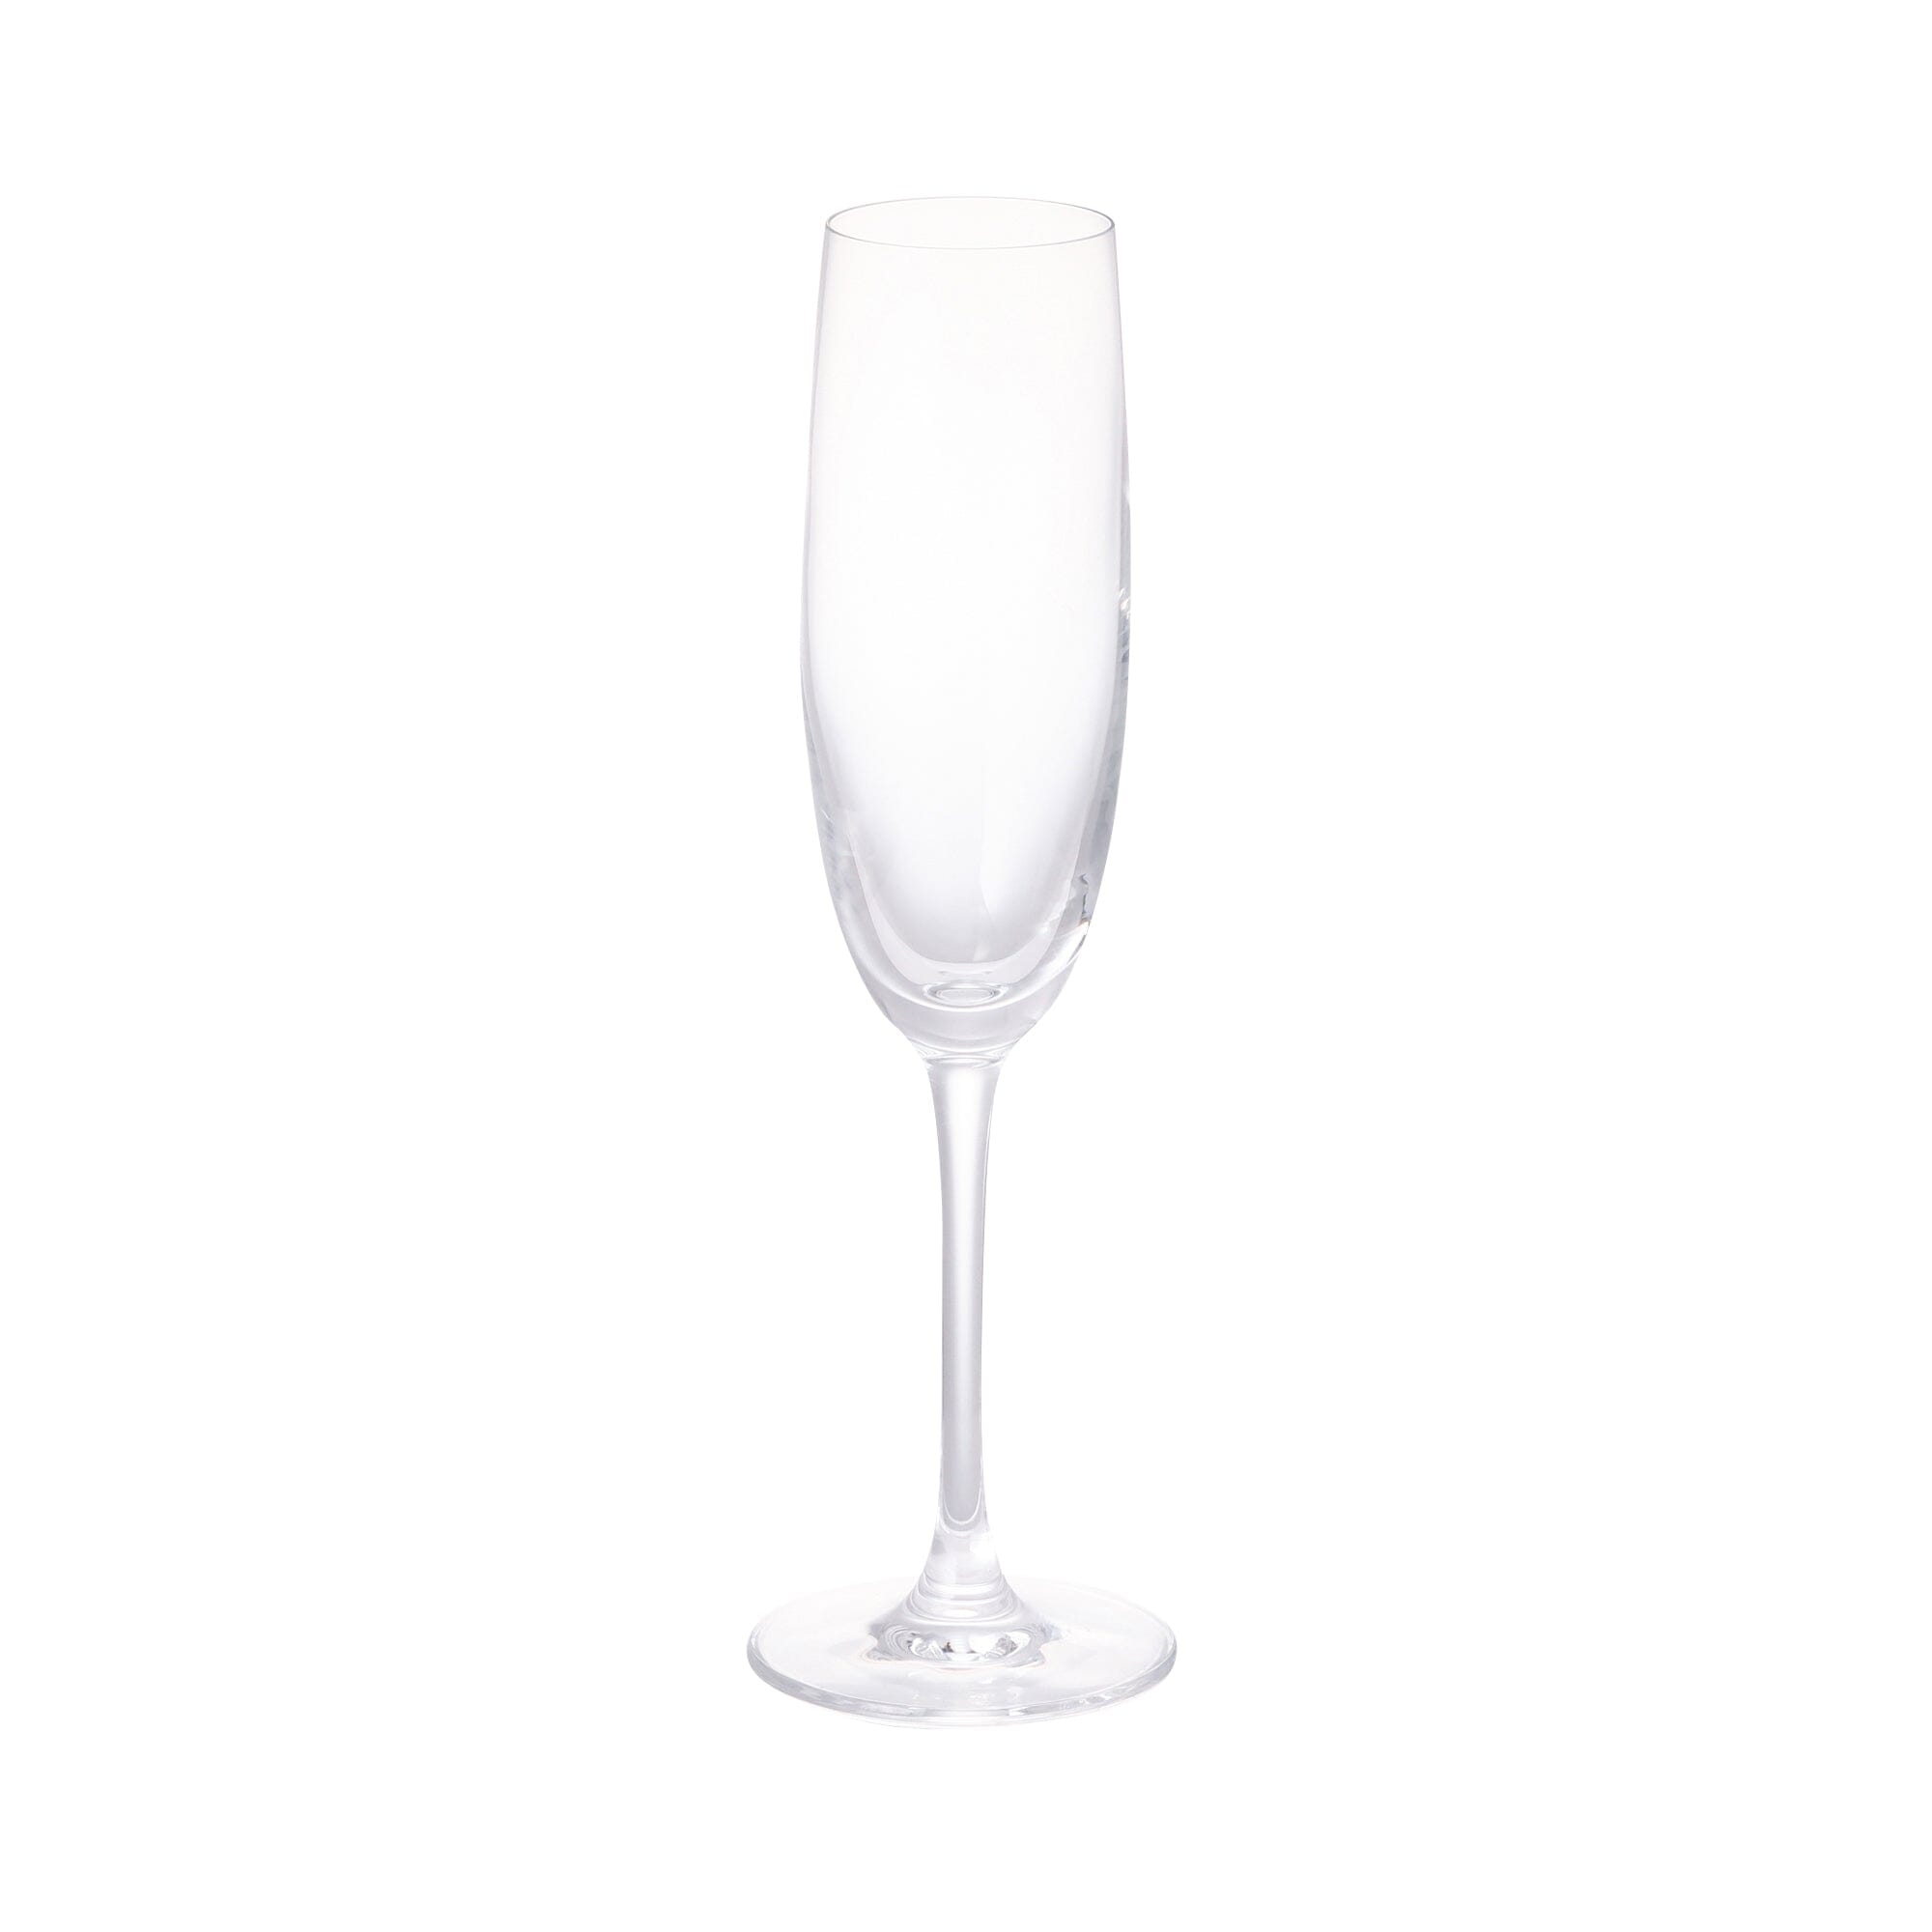 PAIR GIFT 禮物套裝水晶香檳玻璃杯